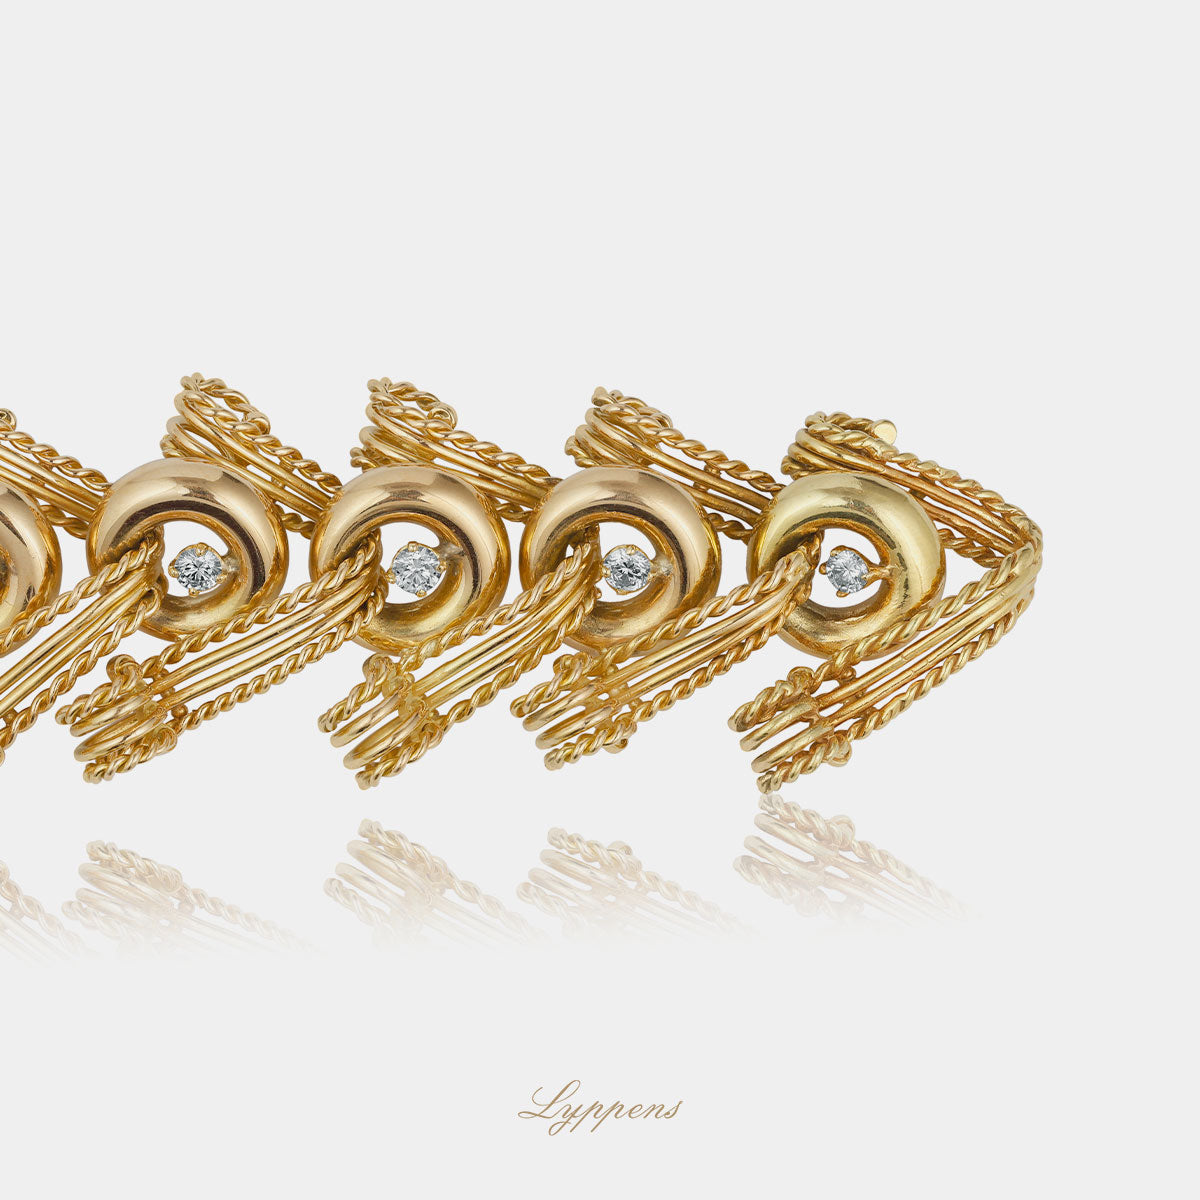 Yellow gold 1950s bracelet with diamonds